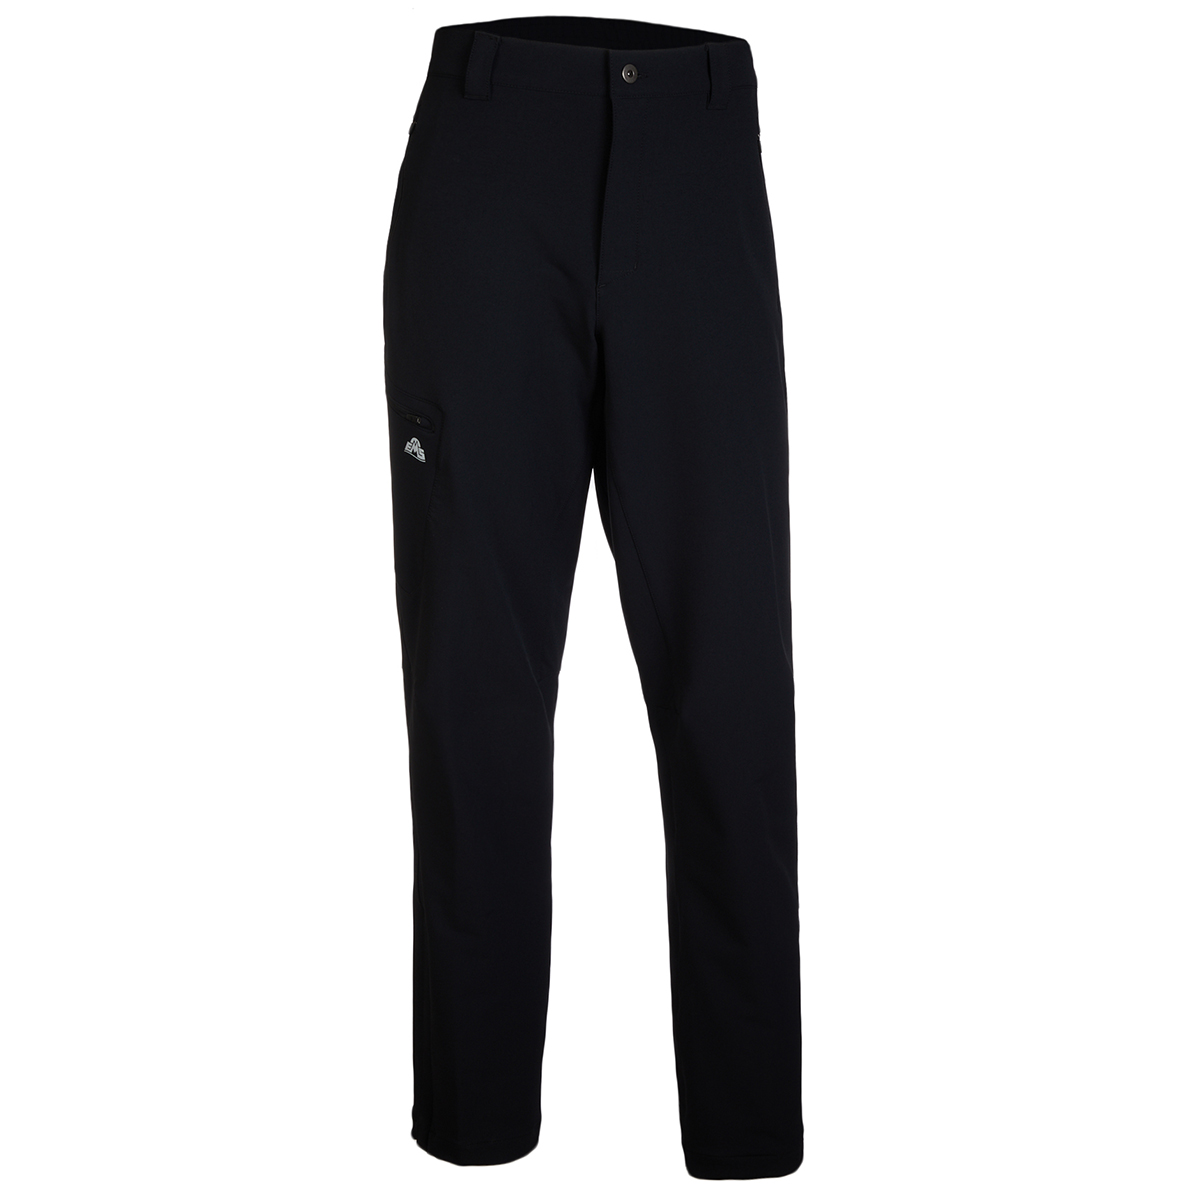 Ems Men's Pinnacle Soft Shell Pants - Black, 40/30